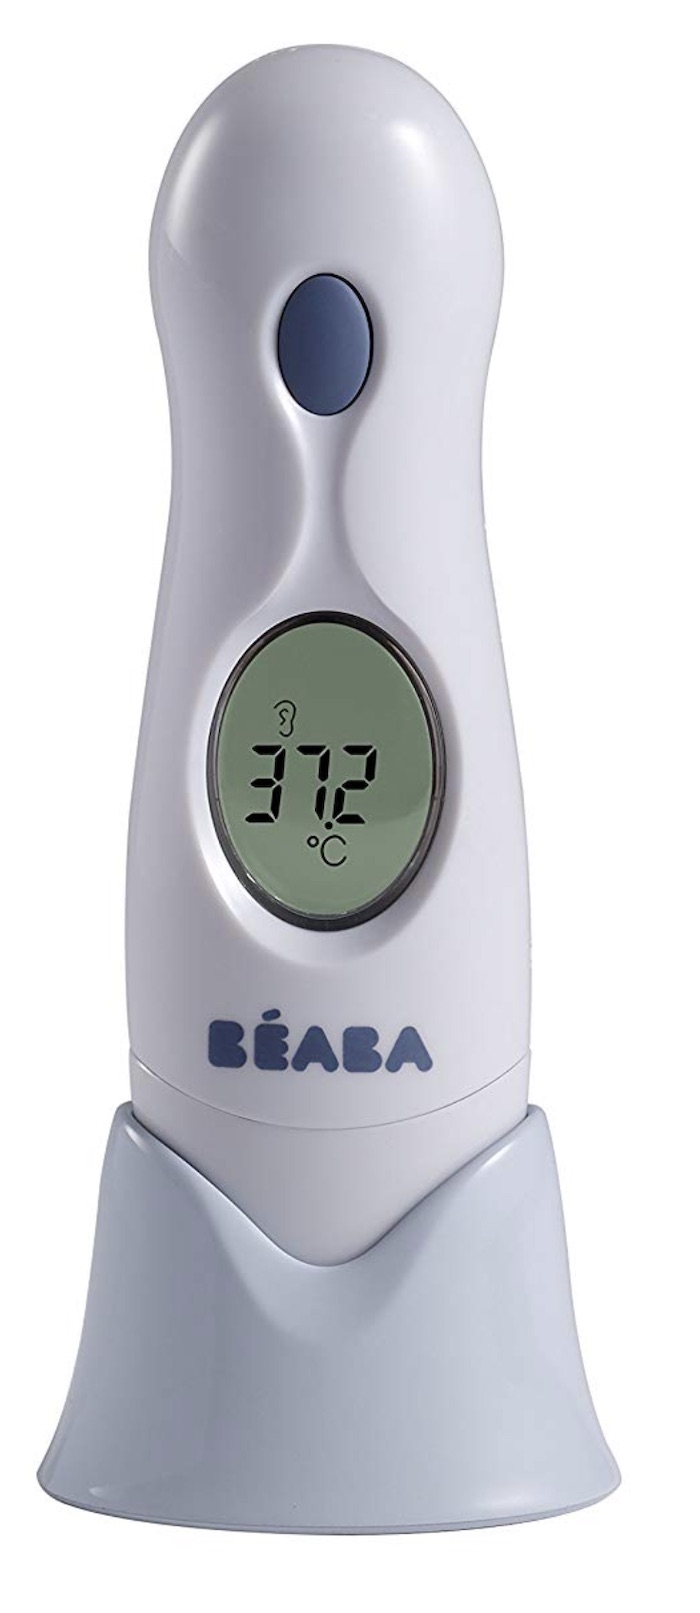 7747 le thermometre bebe l indicateur fiable 4